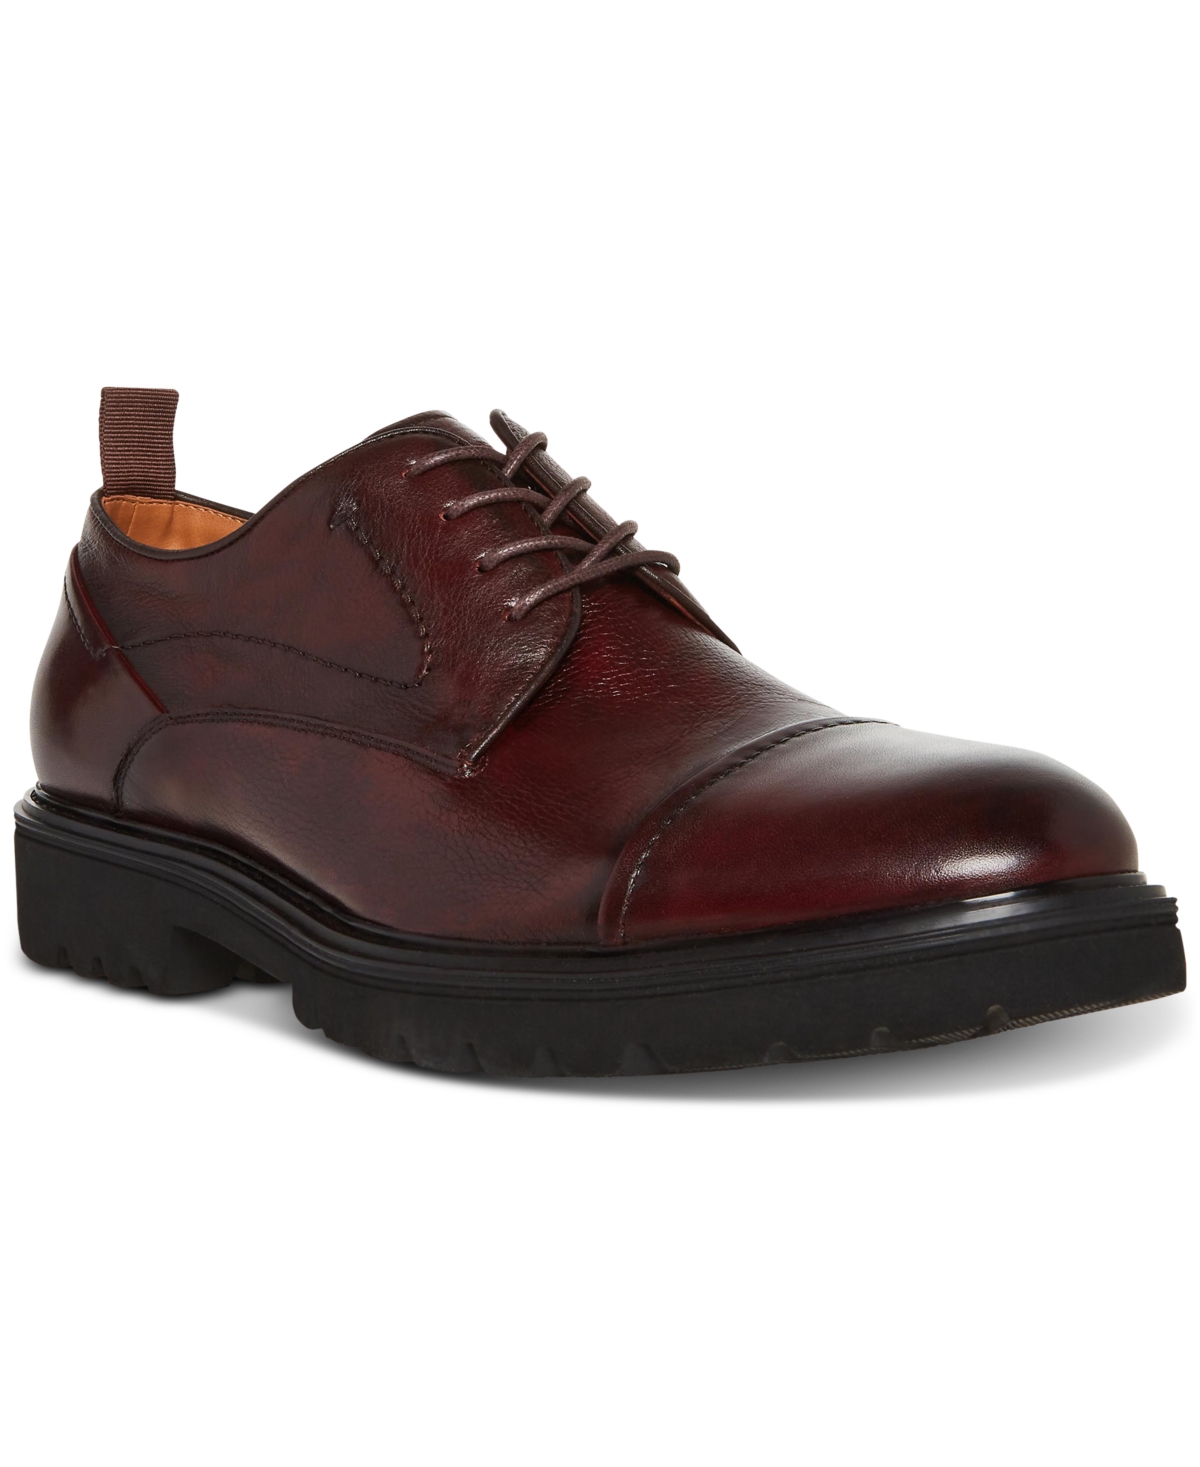 Men's Epcot Oxford Leather Dress Shoes - Burgundy